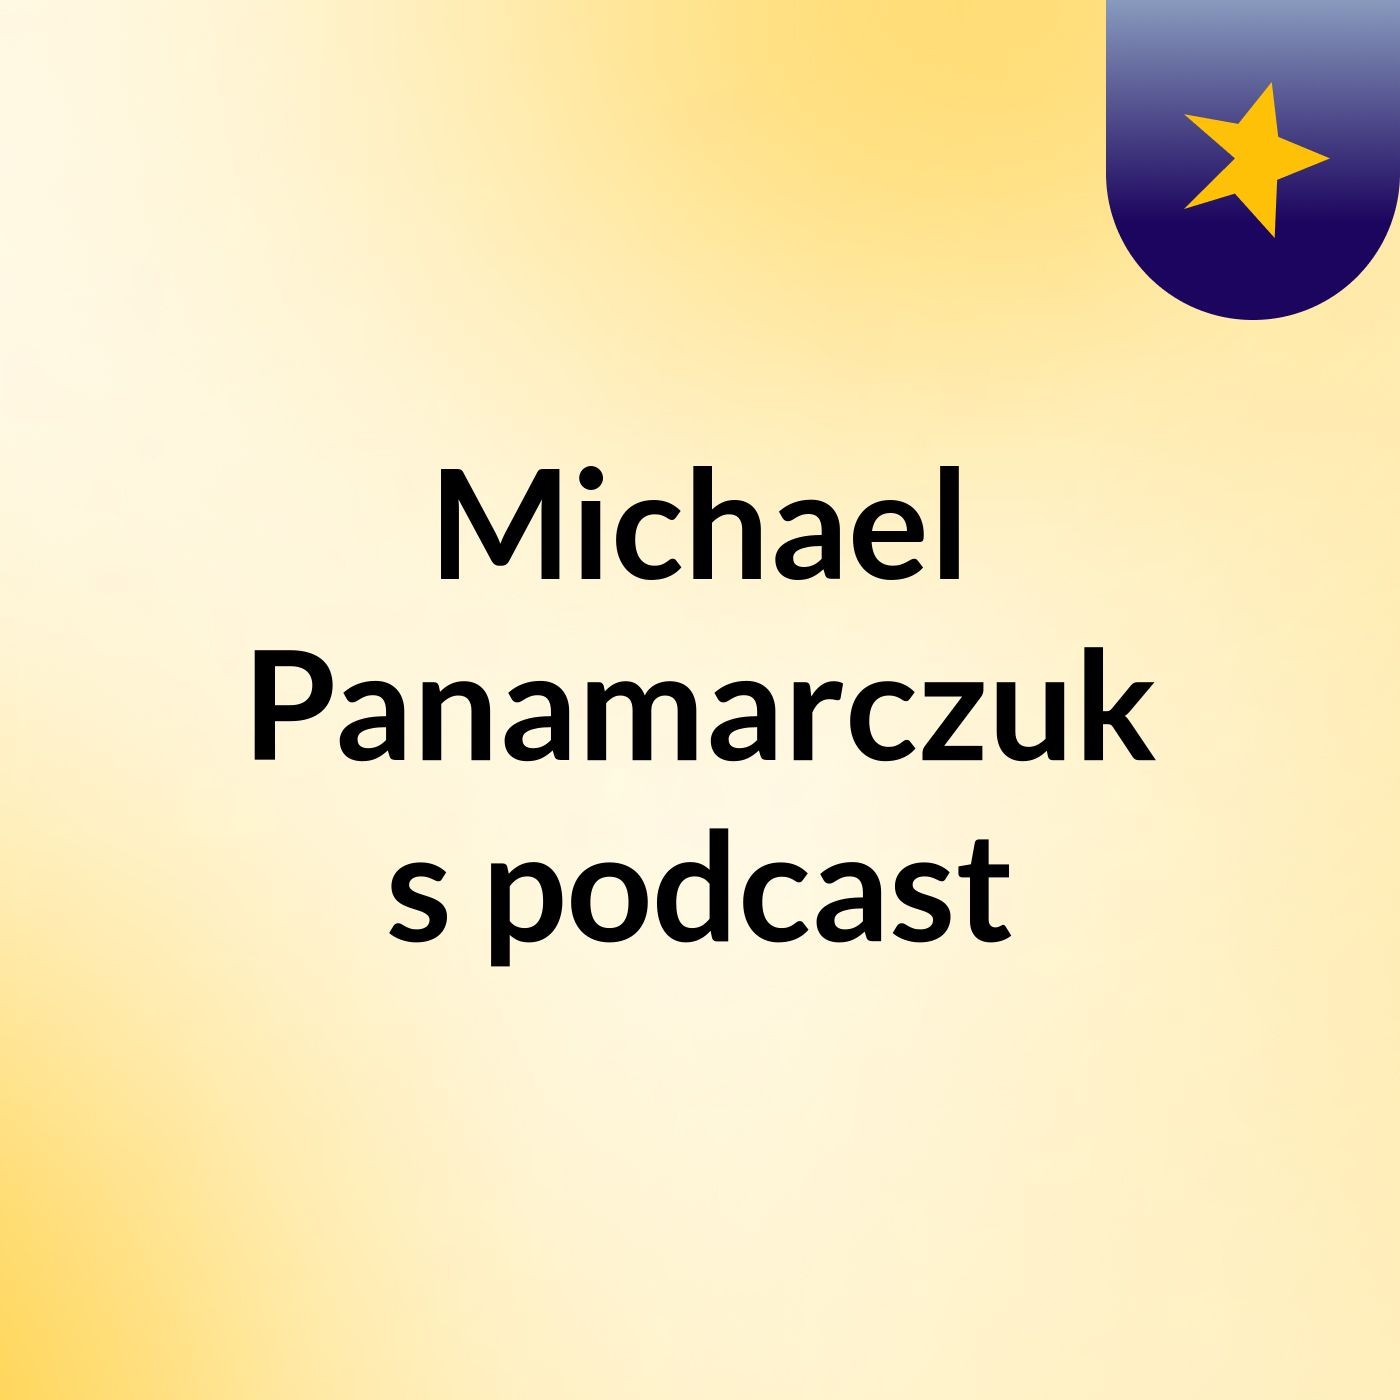 Episode 15 - Michael Panamarczuk's podcast